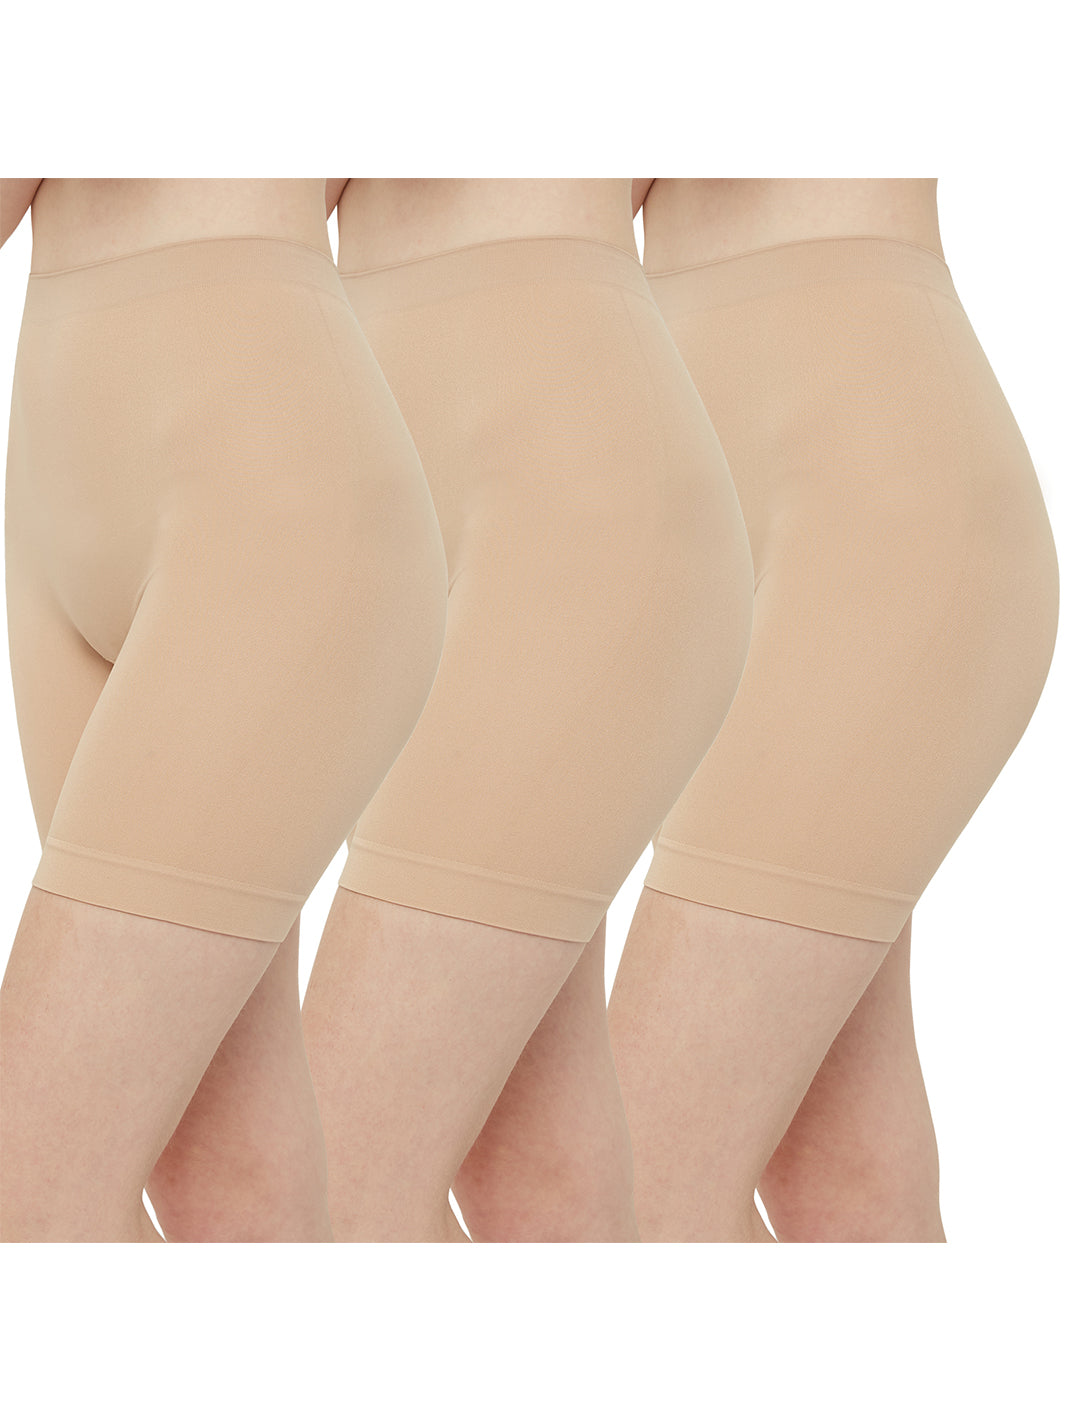 INNERSY Sporty Slip Shorts for Women Under Dresses Cooling Anti